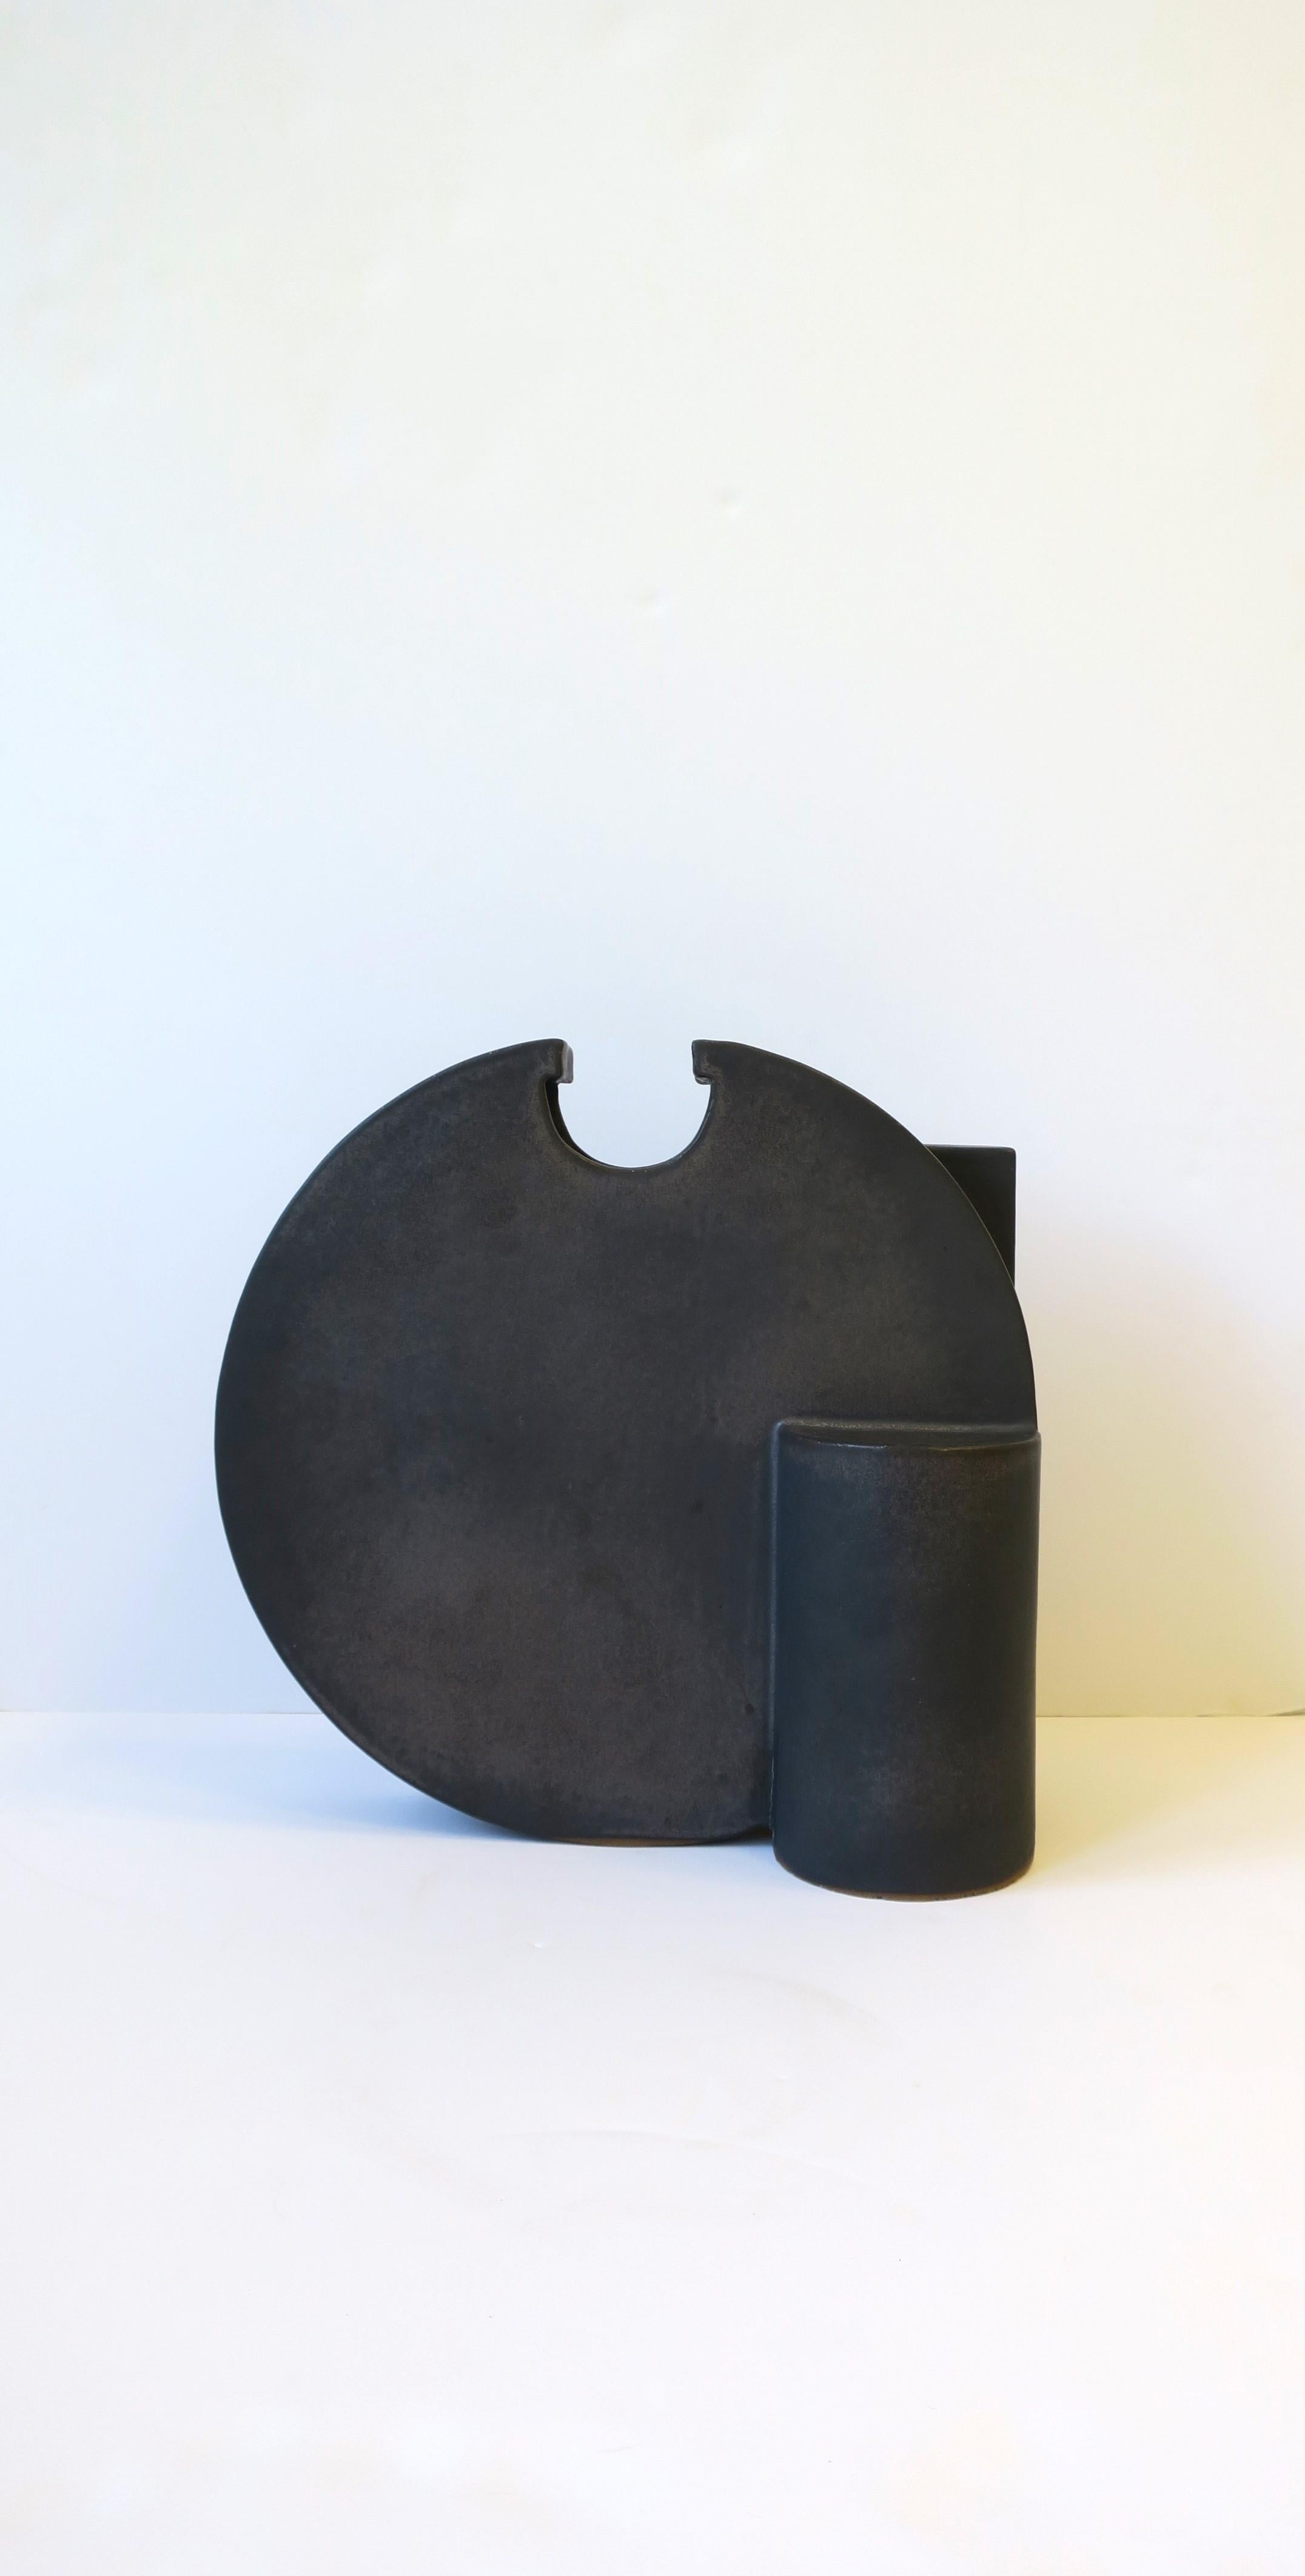 American Black Charcoal Grey Sculpture Vase, Large For Sale